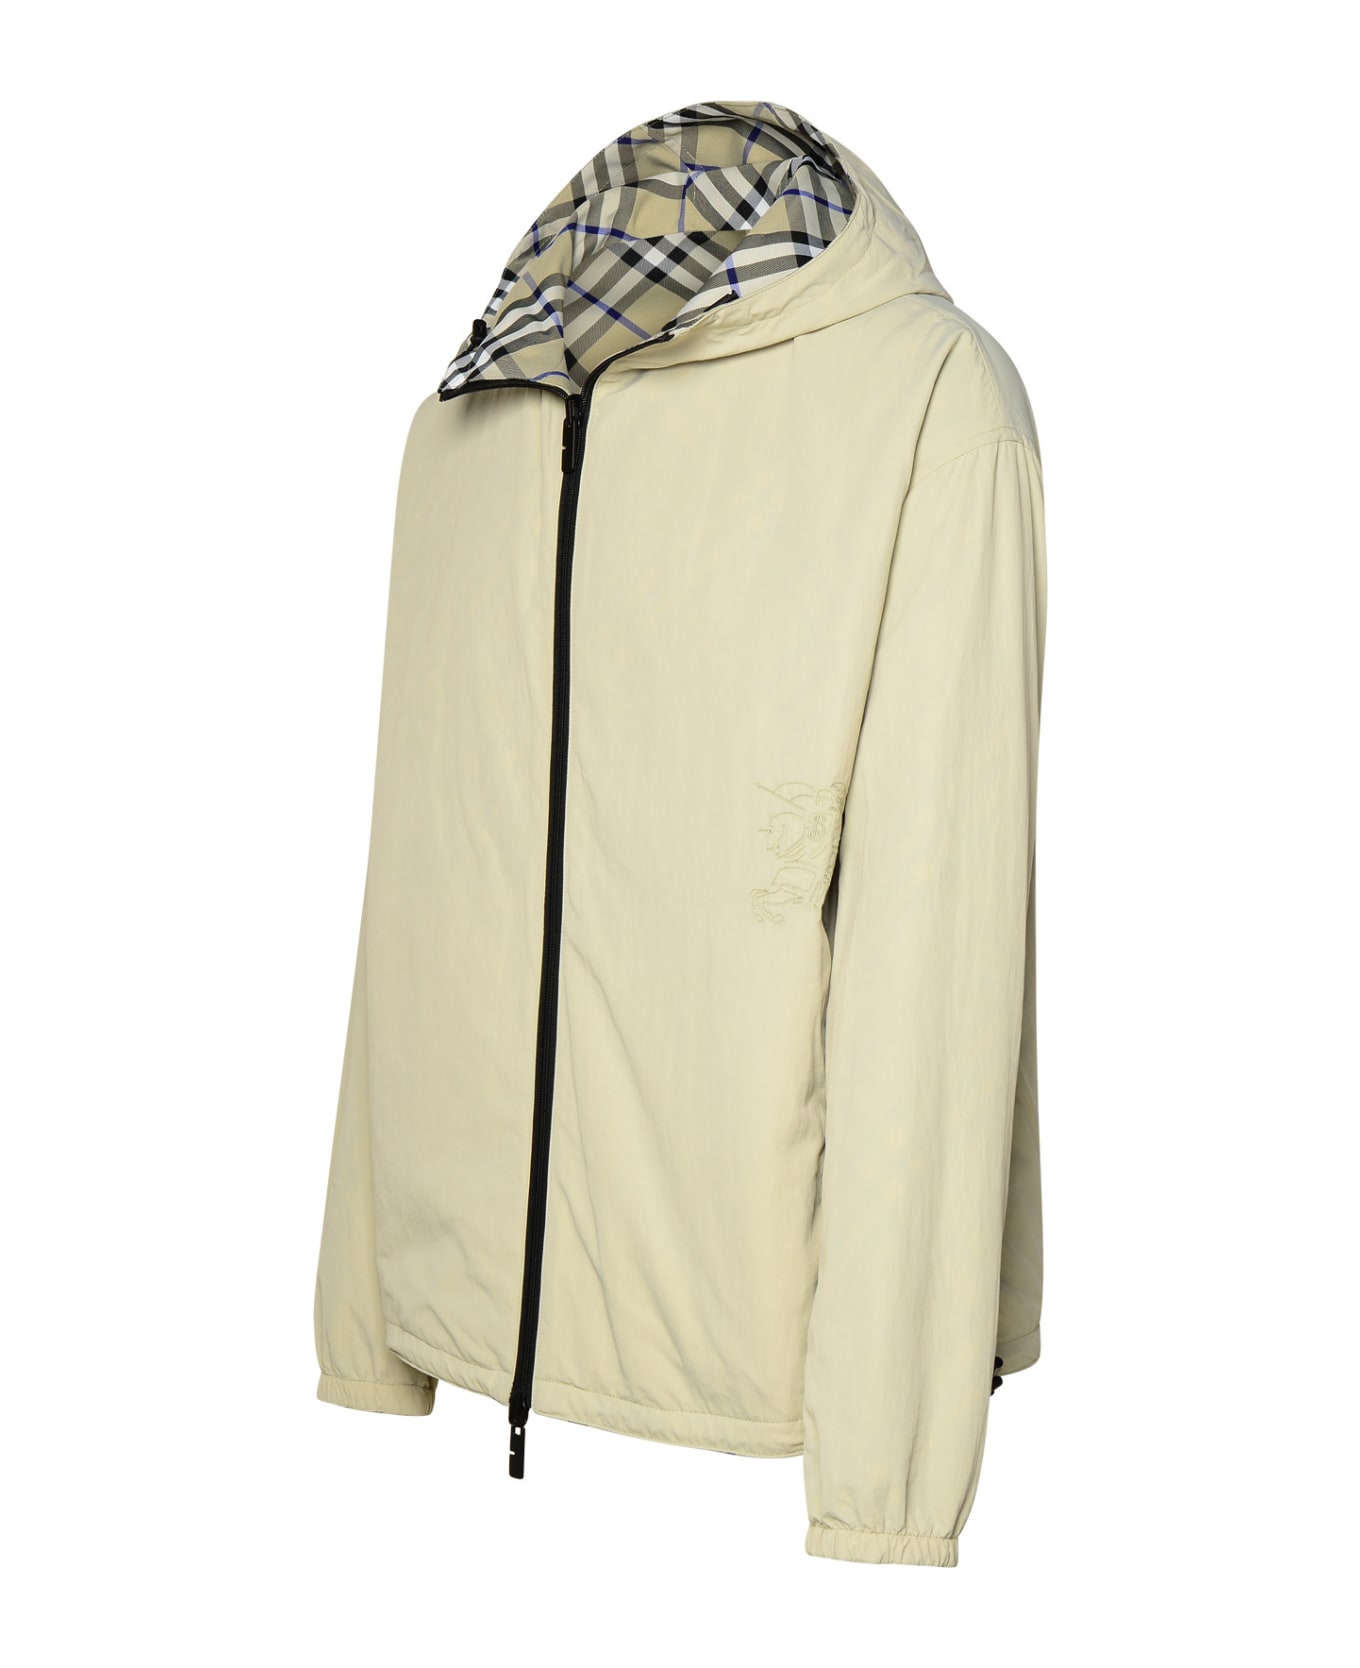 Burberry Reversible Beige Polyester Jacket - Beige ジャケット